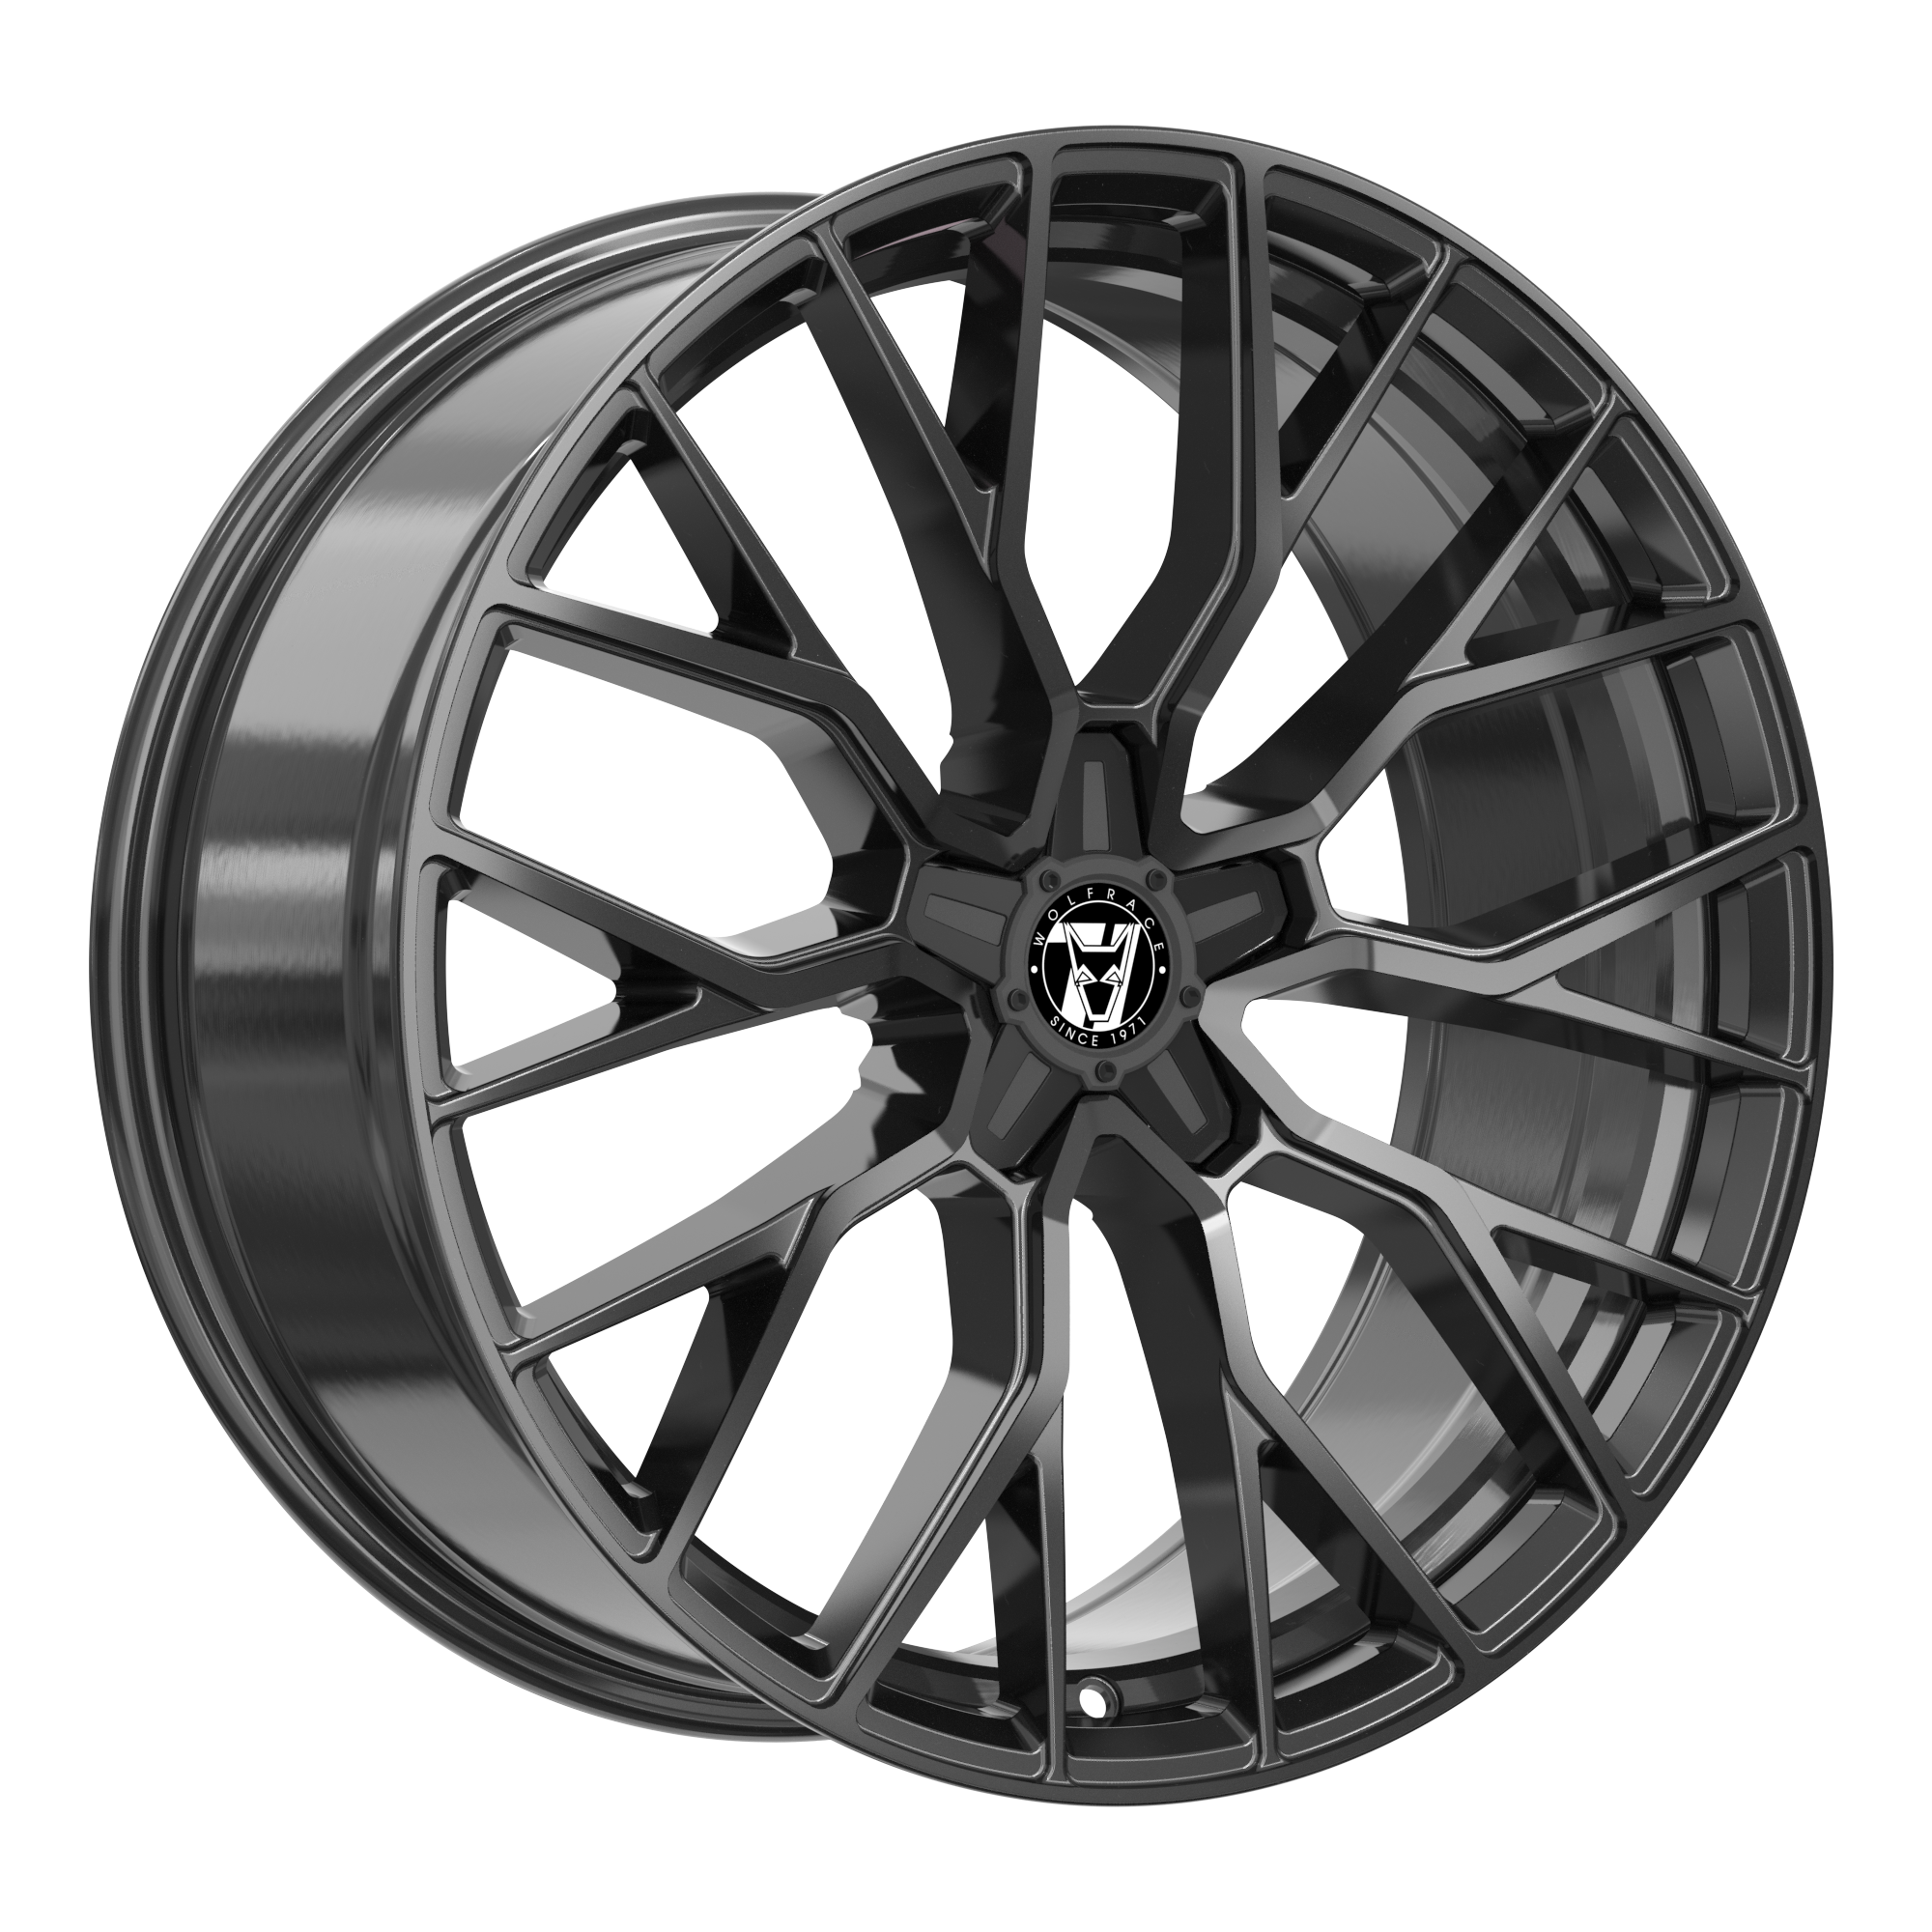 Demon Wheels 71 Munich GTR Black Edition [10.5x22] -5x130- ET 35